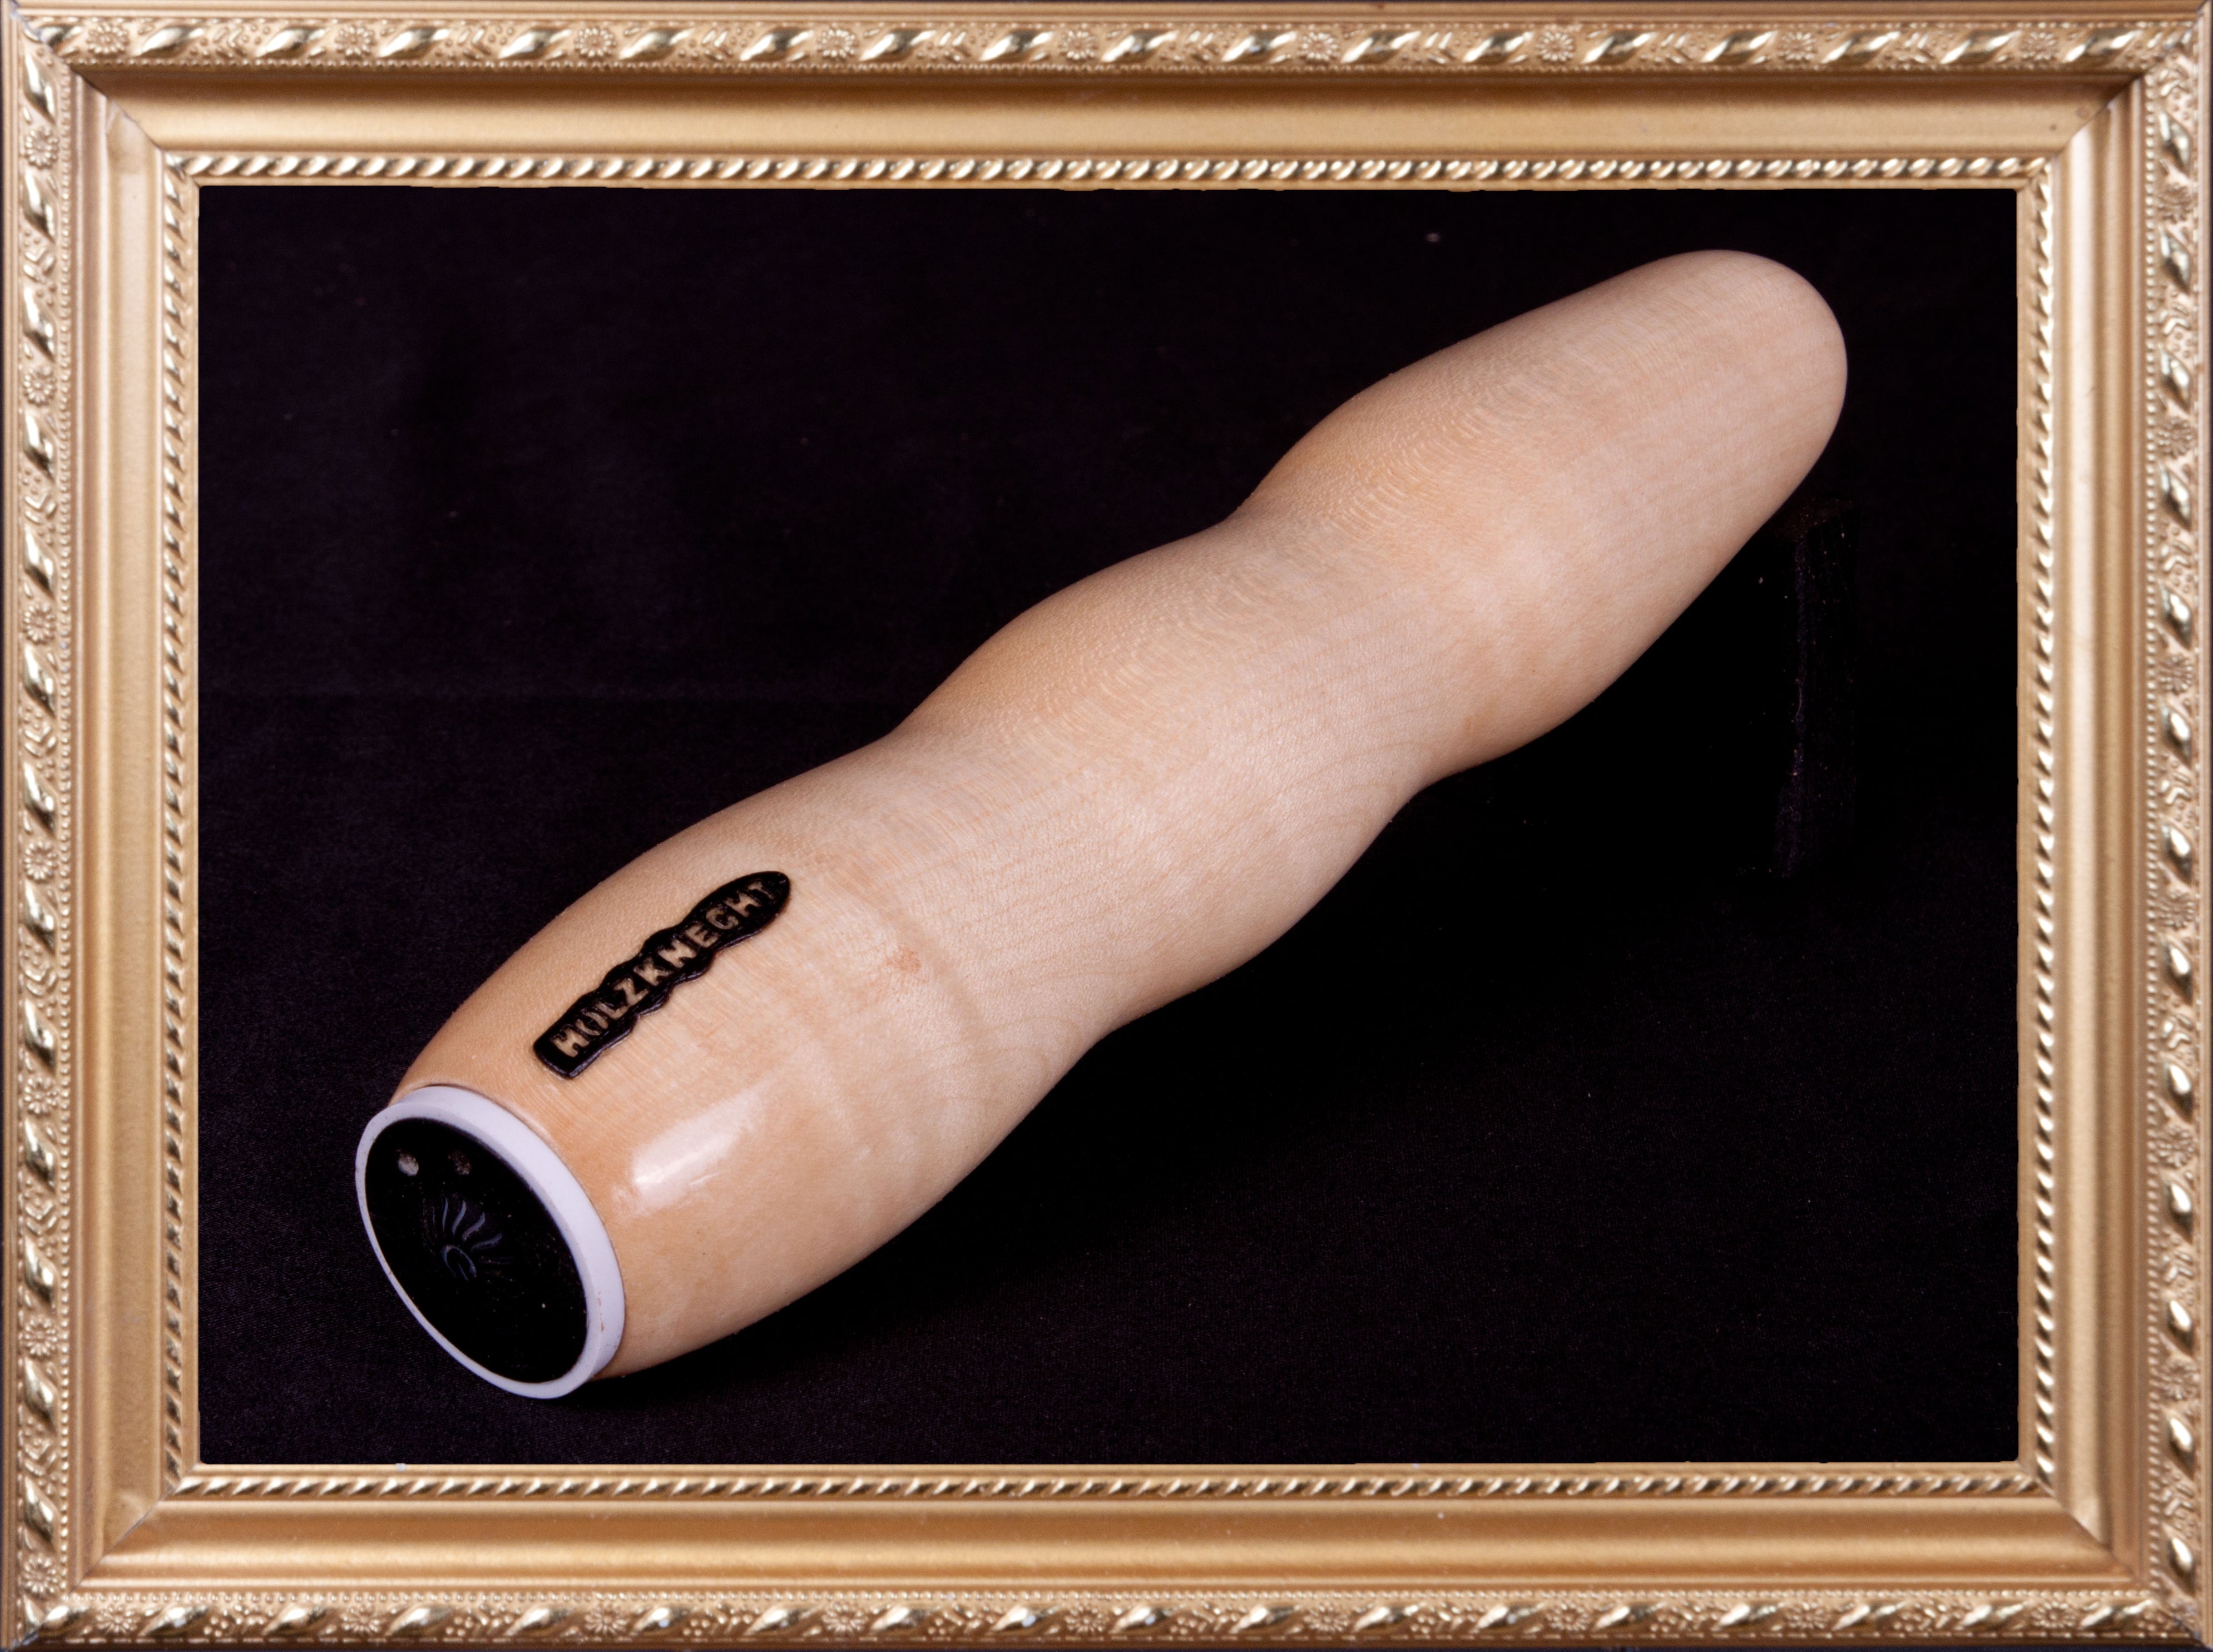 SUMMSI || Ahorn || Holzvibrator || Holzdildo || Sex Toy || Wood Vibrator || handmade by HolzKnecht